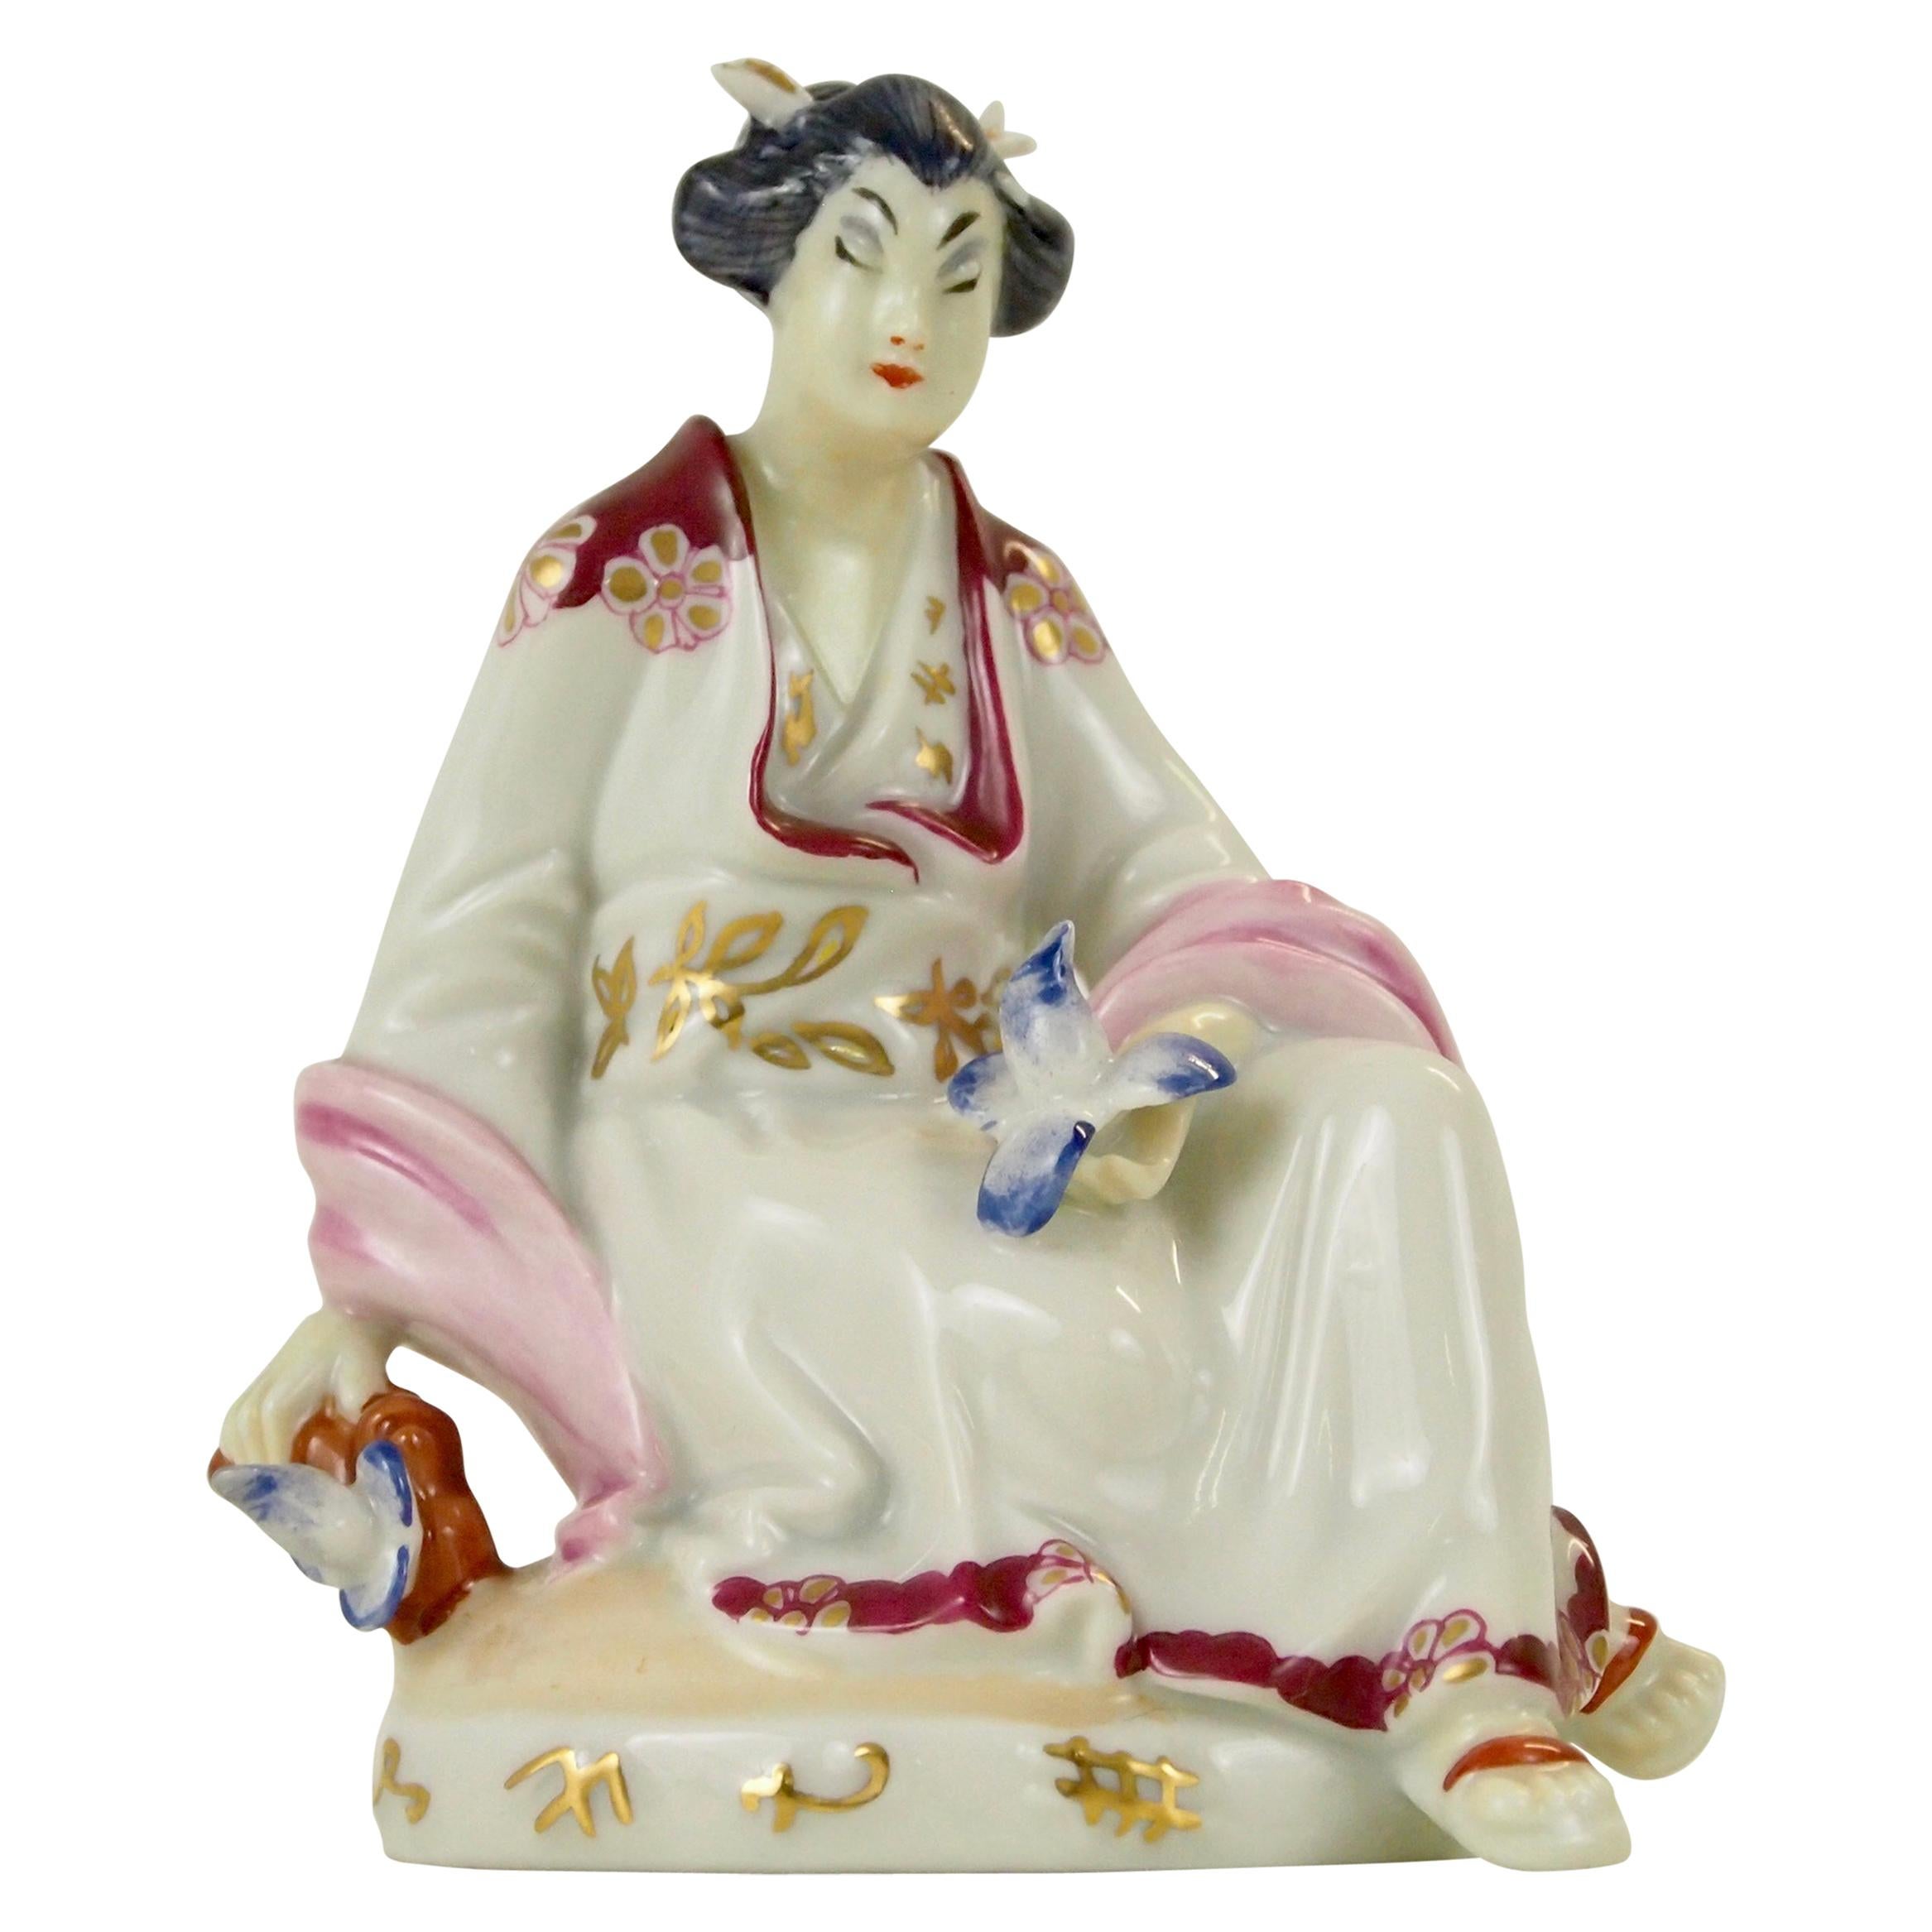 Augarten Wien Porcelain Figurine Depicting a Chinese Woman by Mathilde Jaksch For Sale